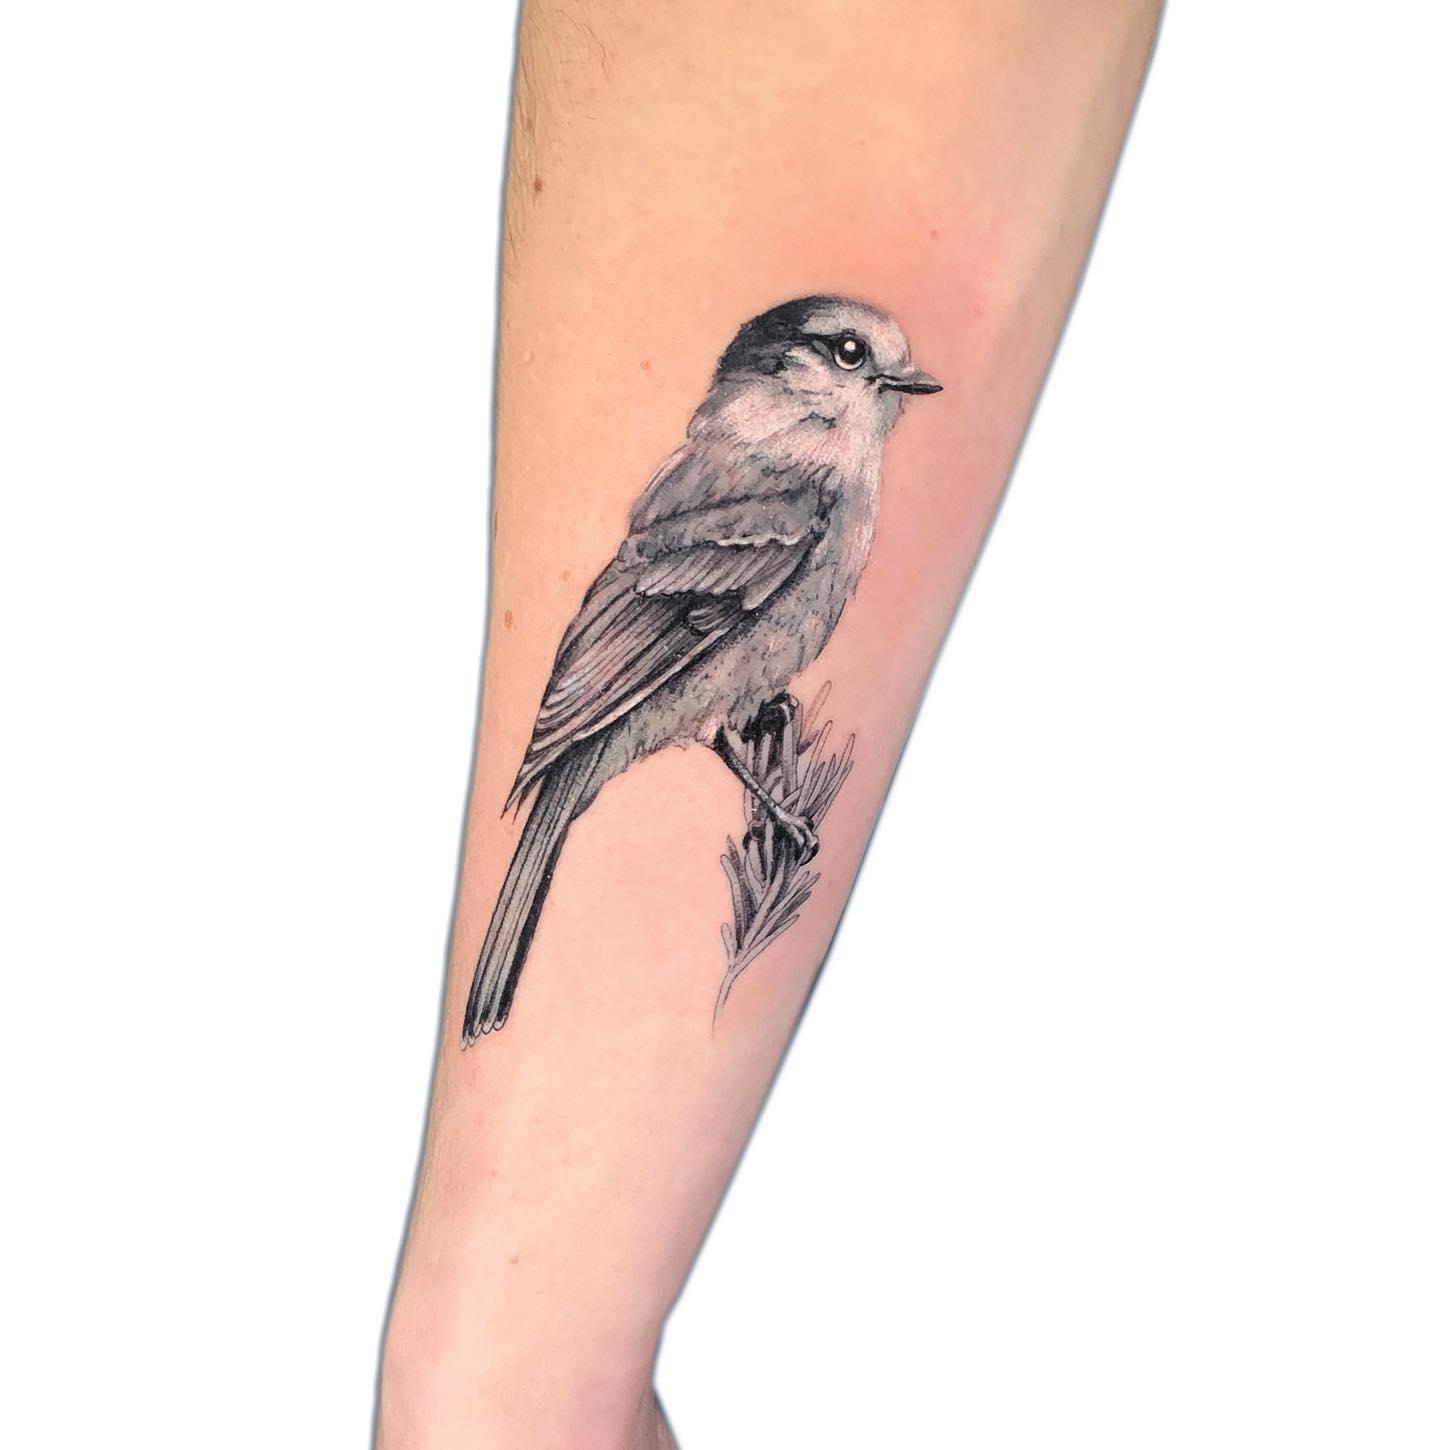 Bird tattoo on Wrist